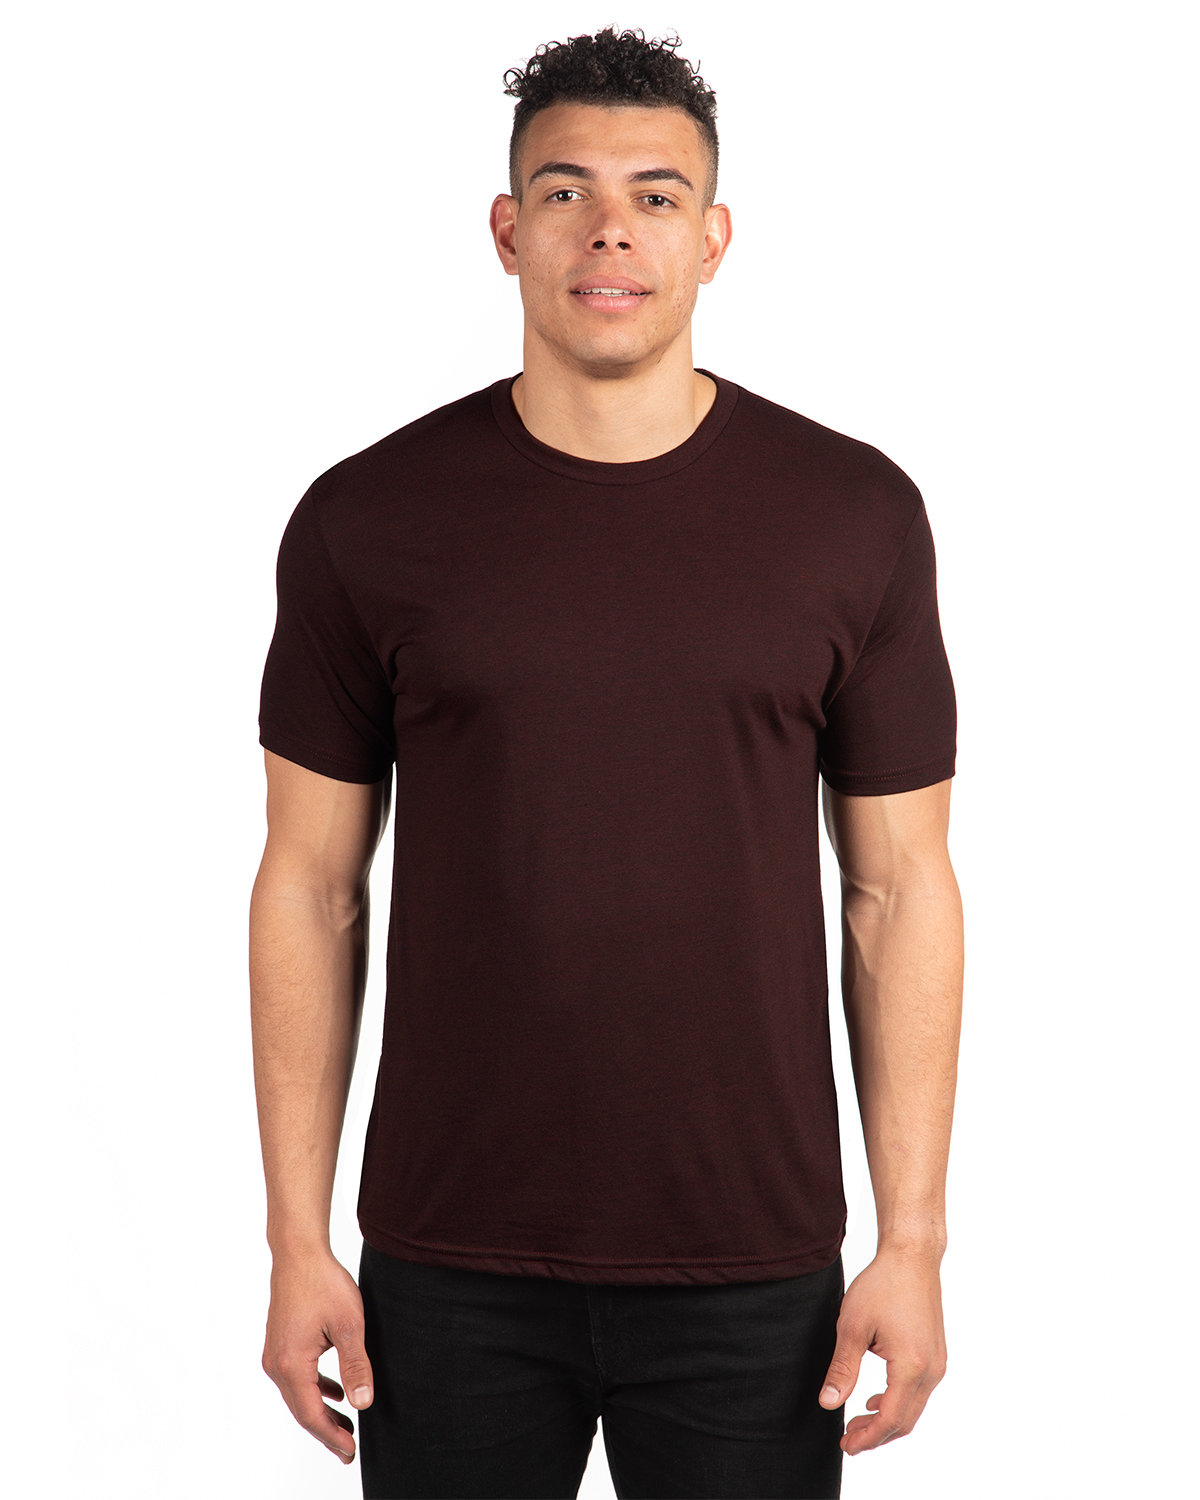 Next Level Apparel Unisex Triblend T-Shirt CARDINAL BLACK 